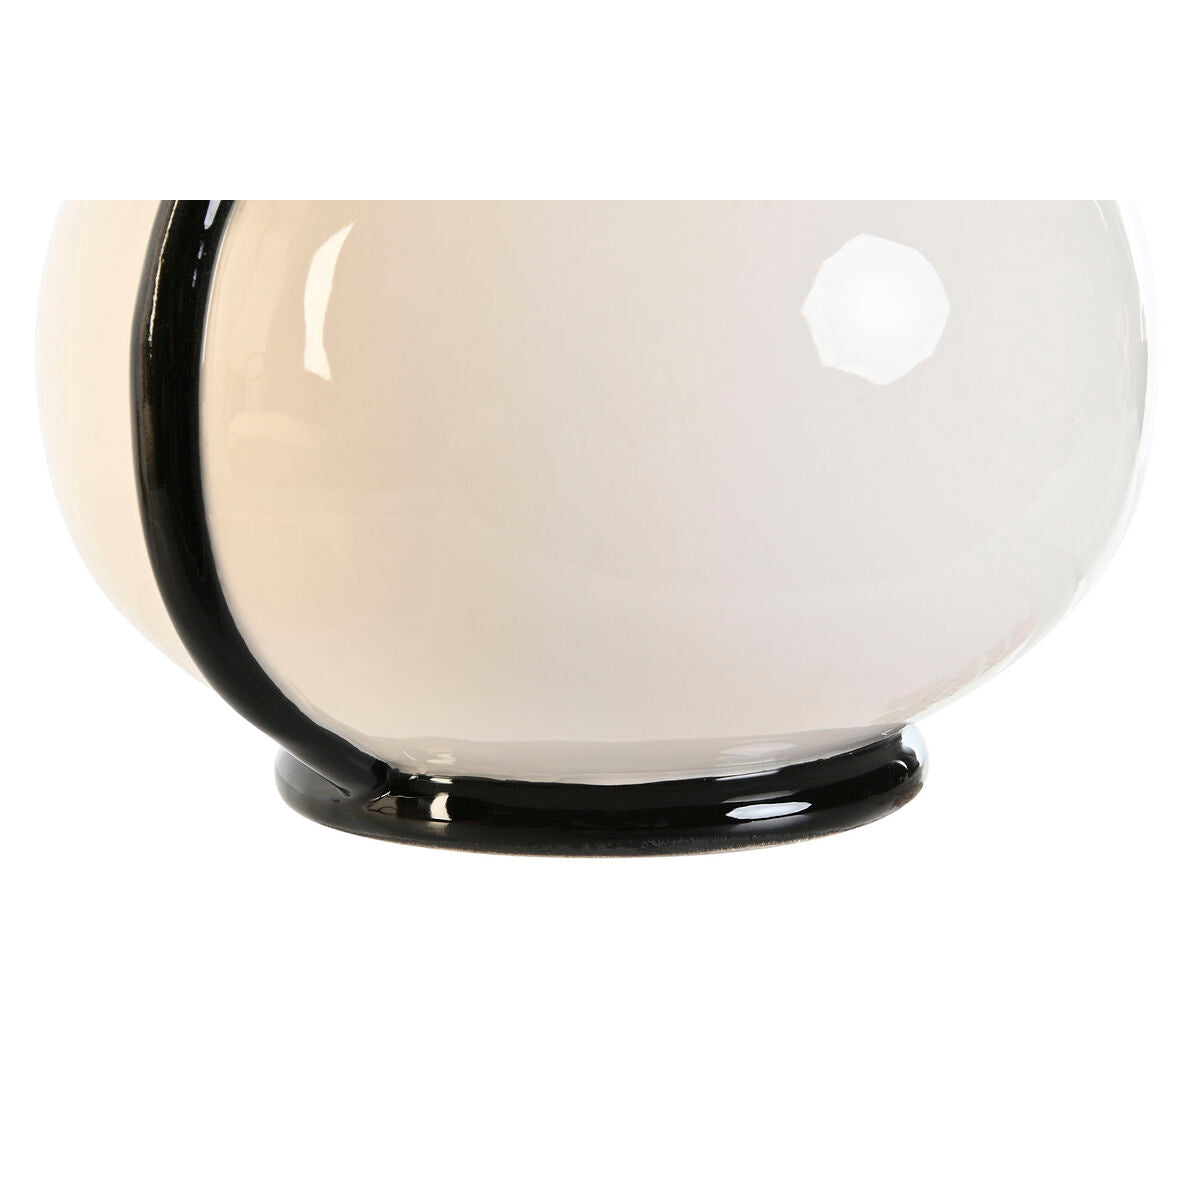 Vas Home Esprit Dvobarvna Keramik Modern 16 X 14 X 21 Cm